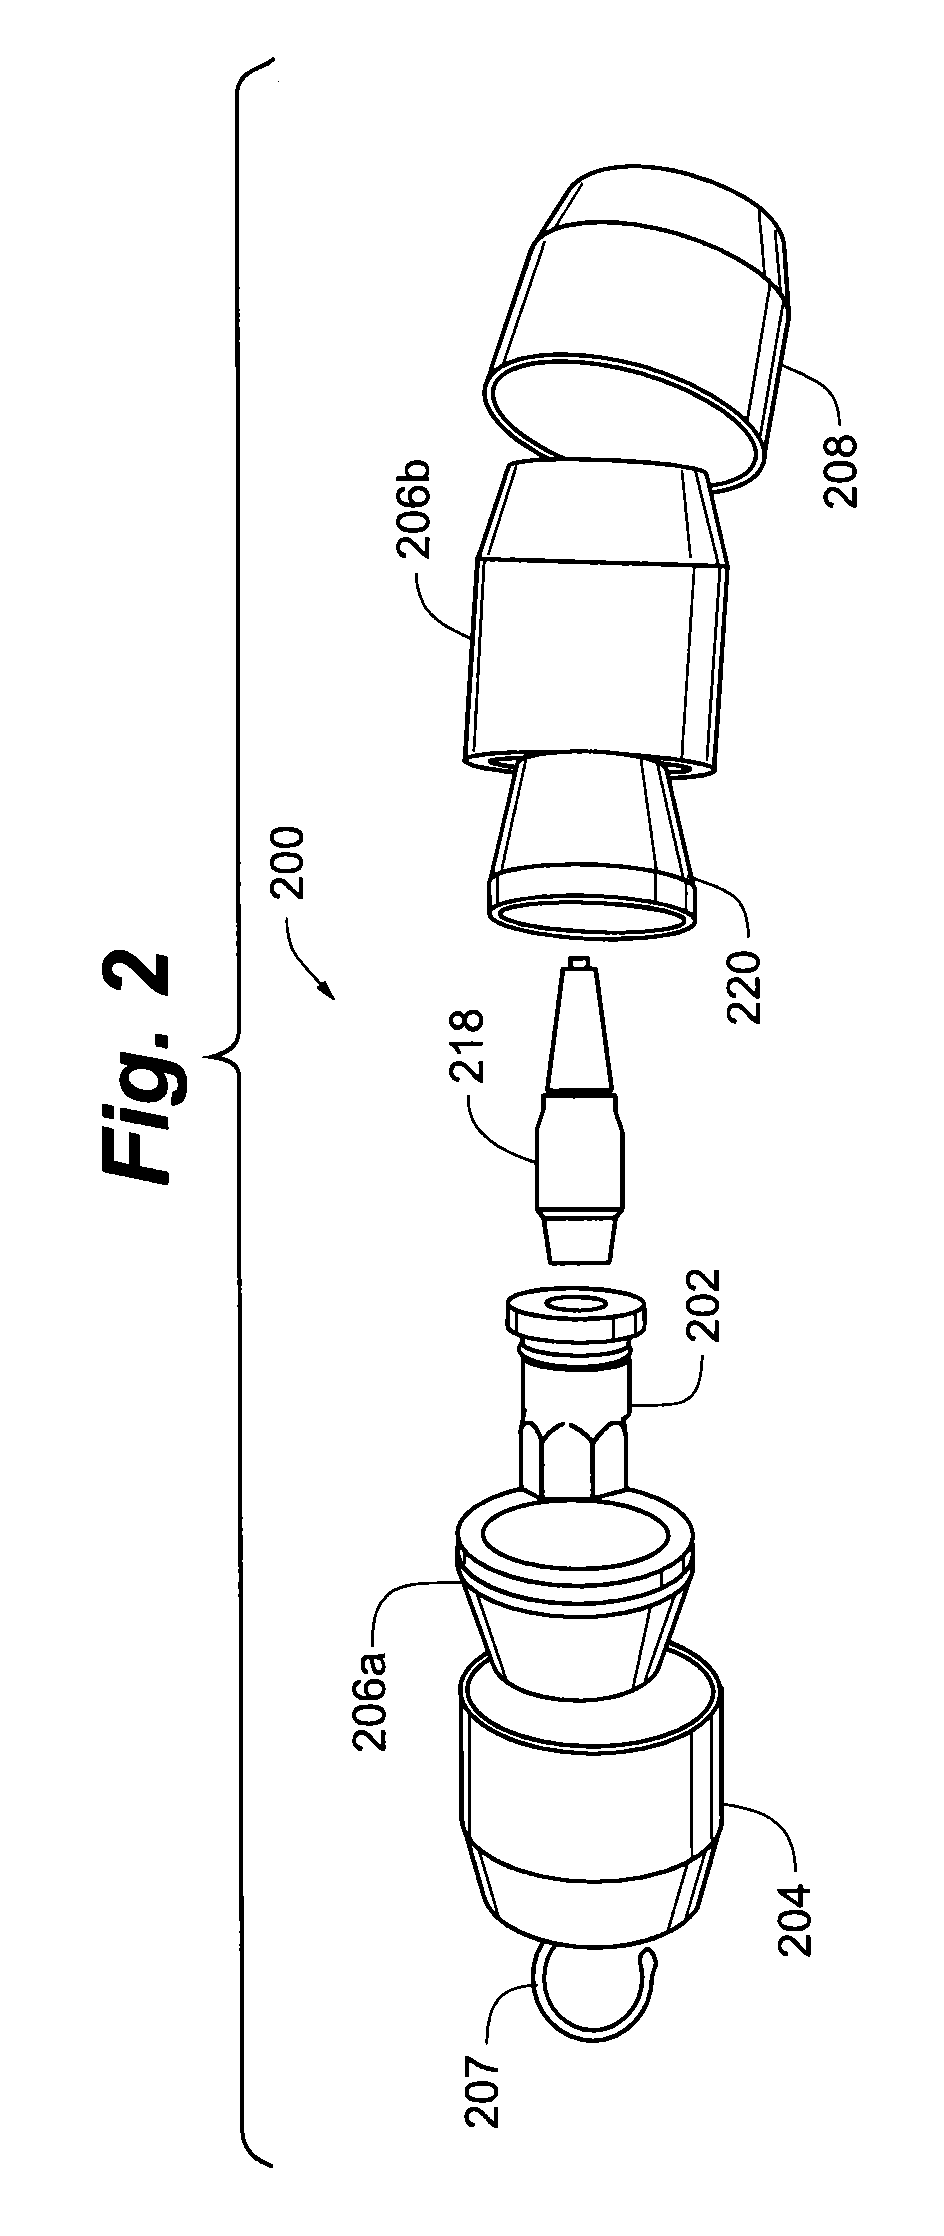 Configurable rotary spray nozzle